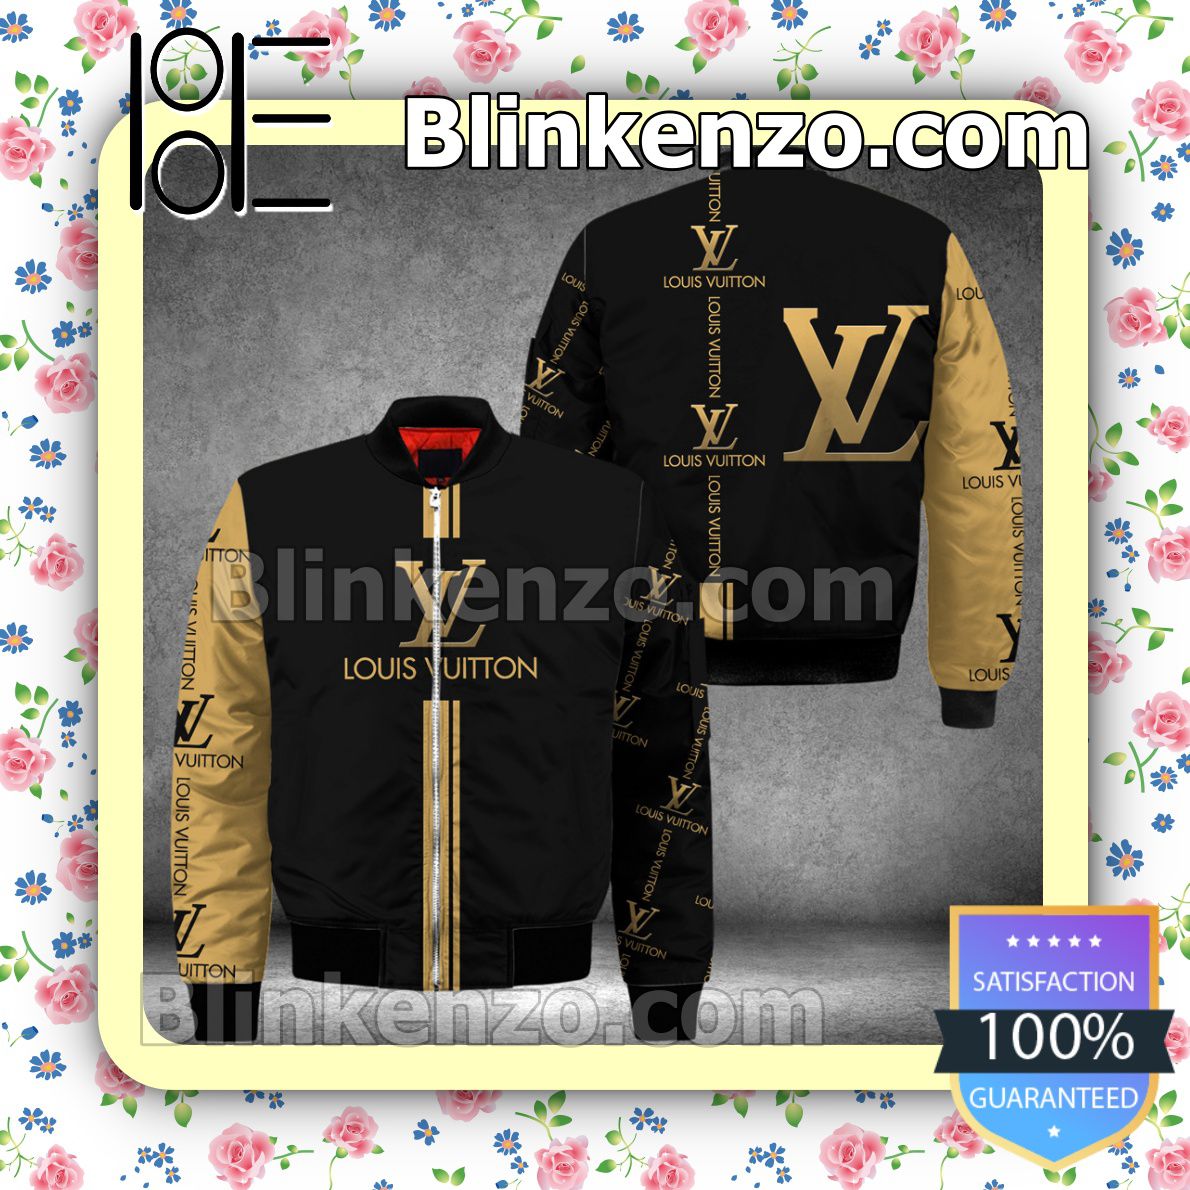 Louis Vuitton Luxury Brand Name And Logo Black Mix Brown Military Jacket Sportwear